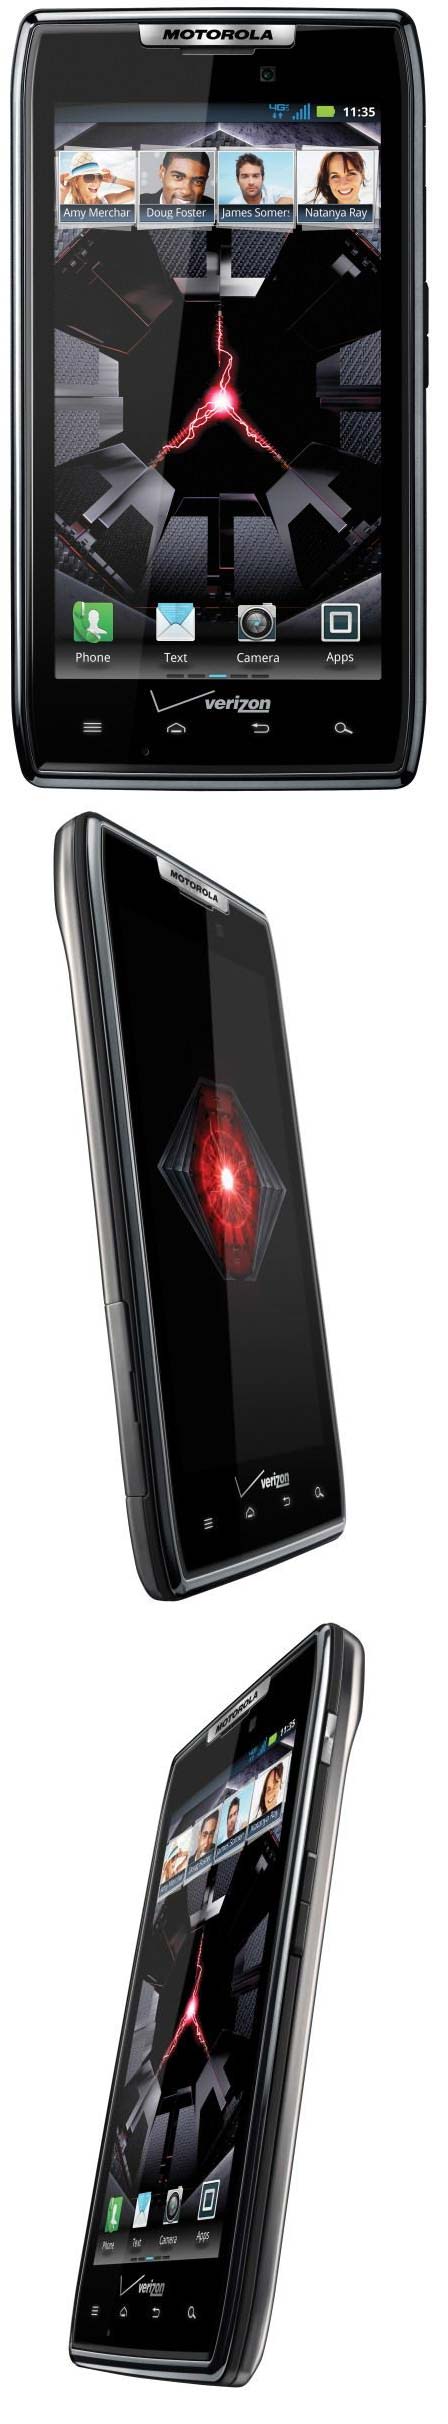 Droid RAZR - новый флагман флота смартфонов Motorola 